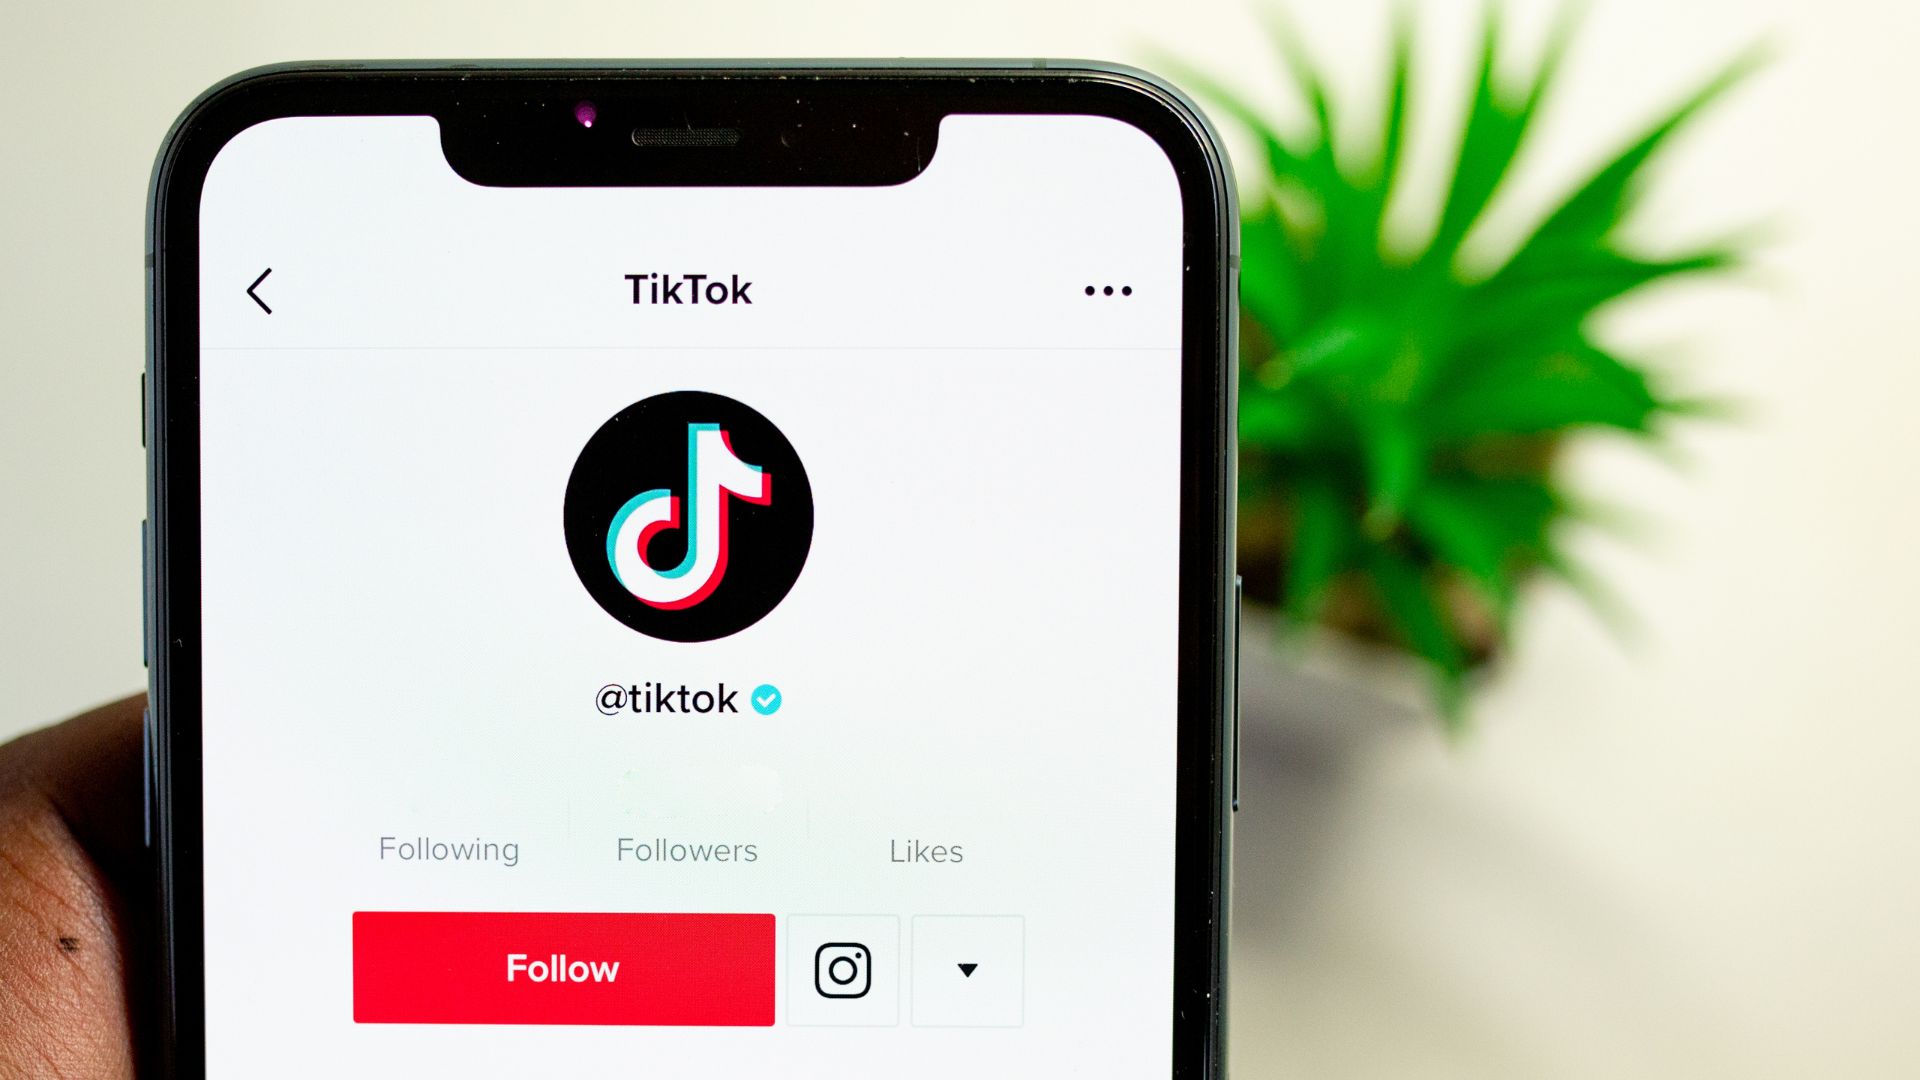 Close up of TikTok's TikTok account on an iPhone.